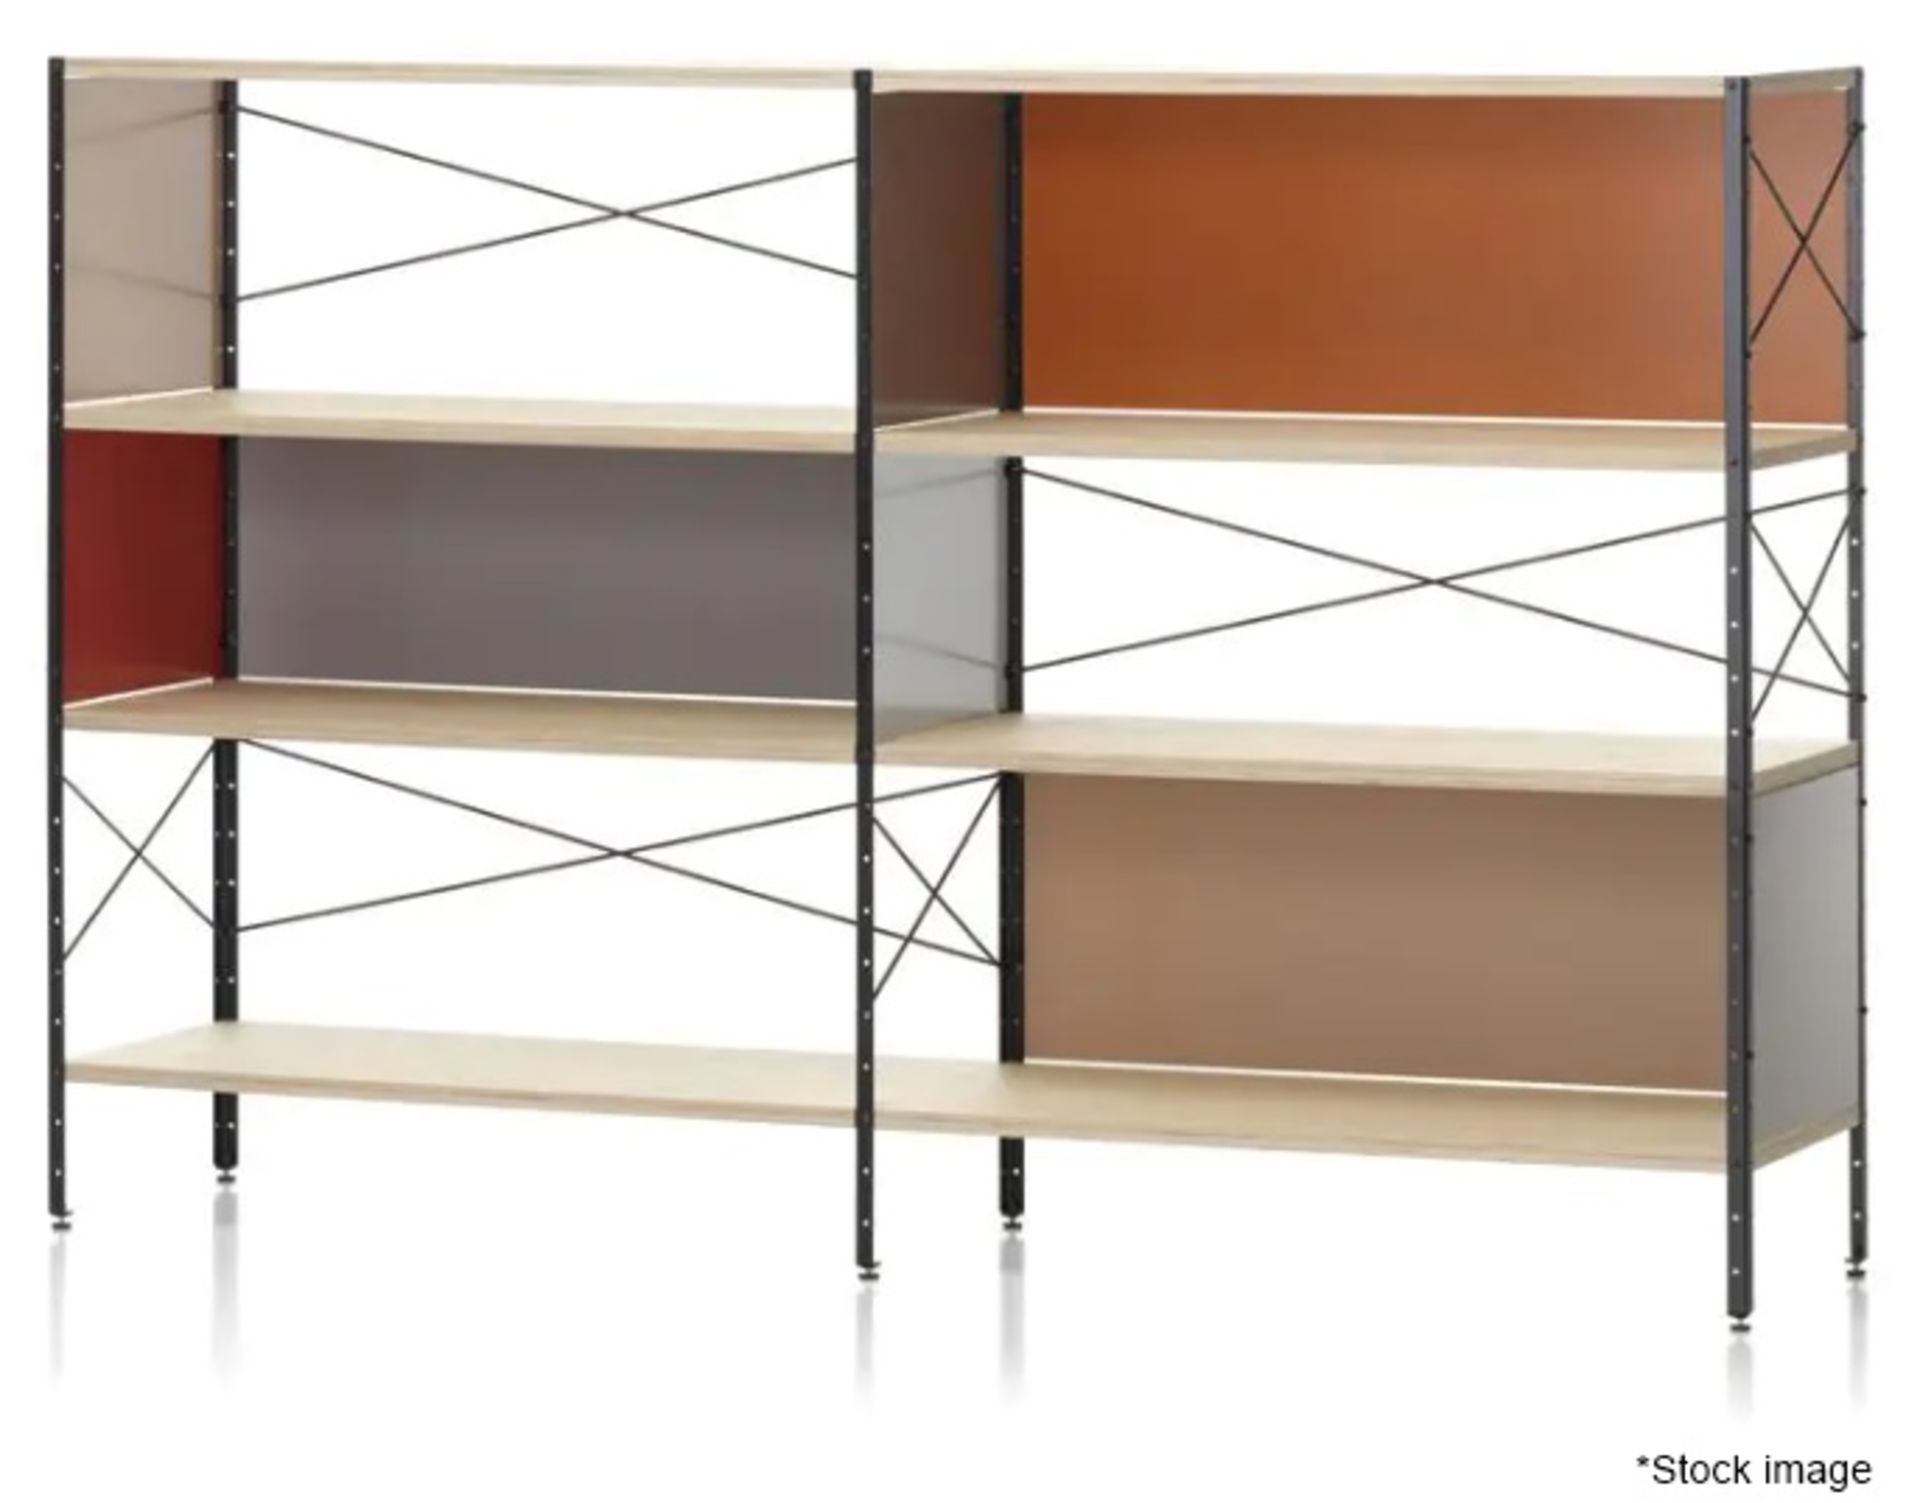 1 x VITRA Eames 'Esu Shelf 3' Designer Bookcase / Storage Unit - Original RRP £2,555 - Image 2 of 7